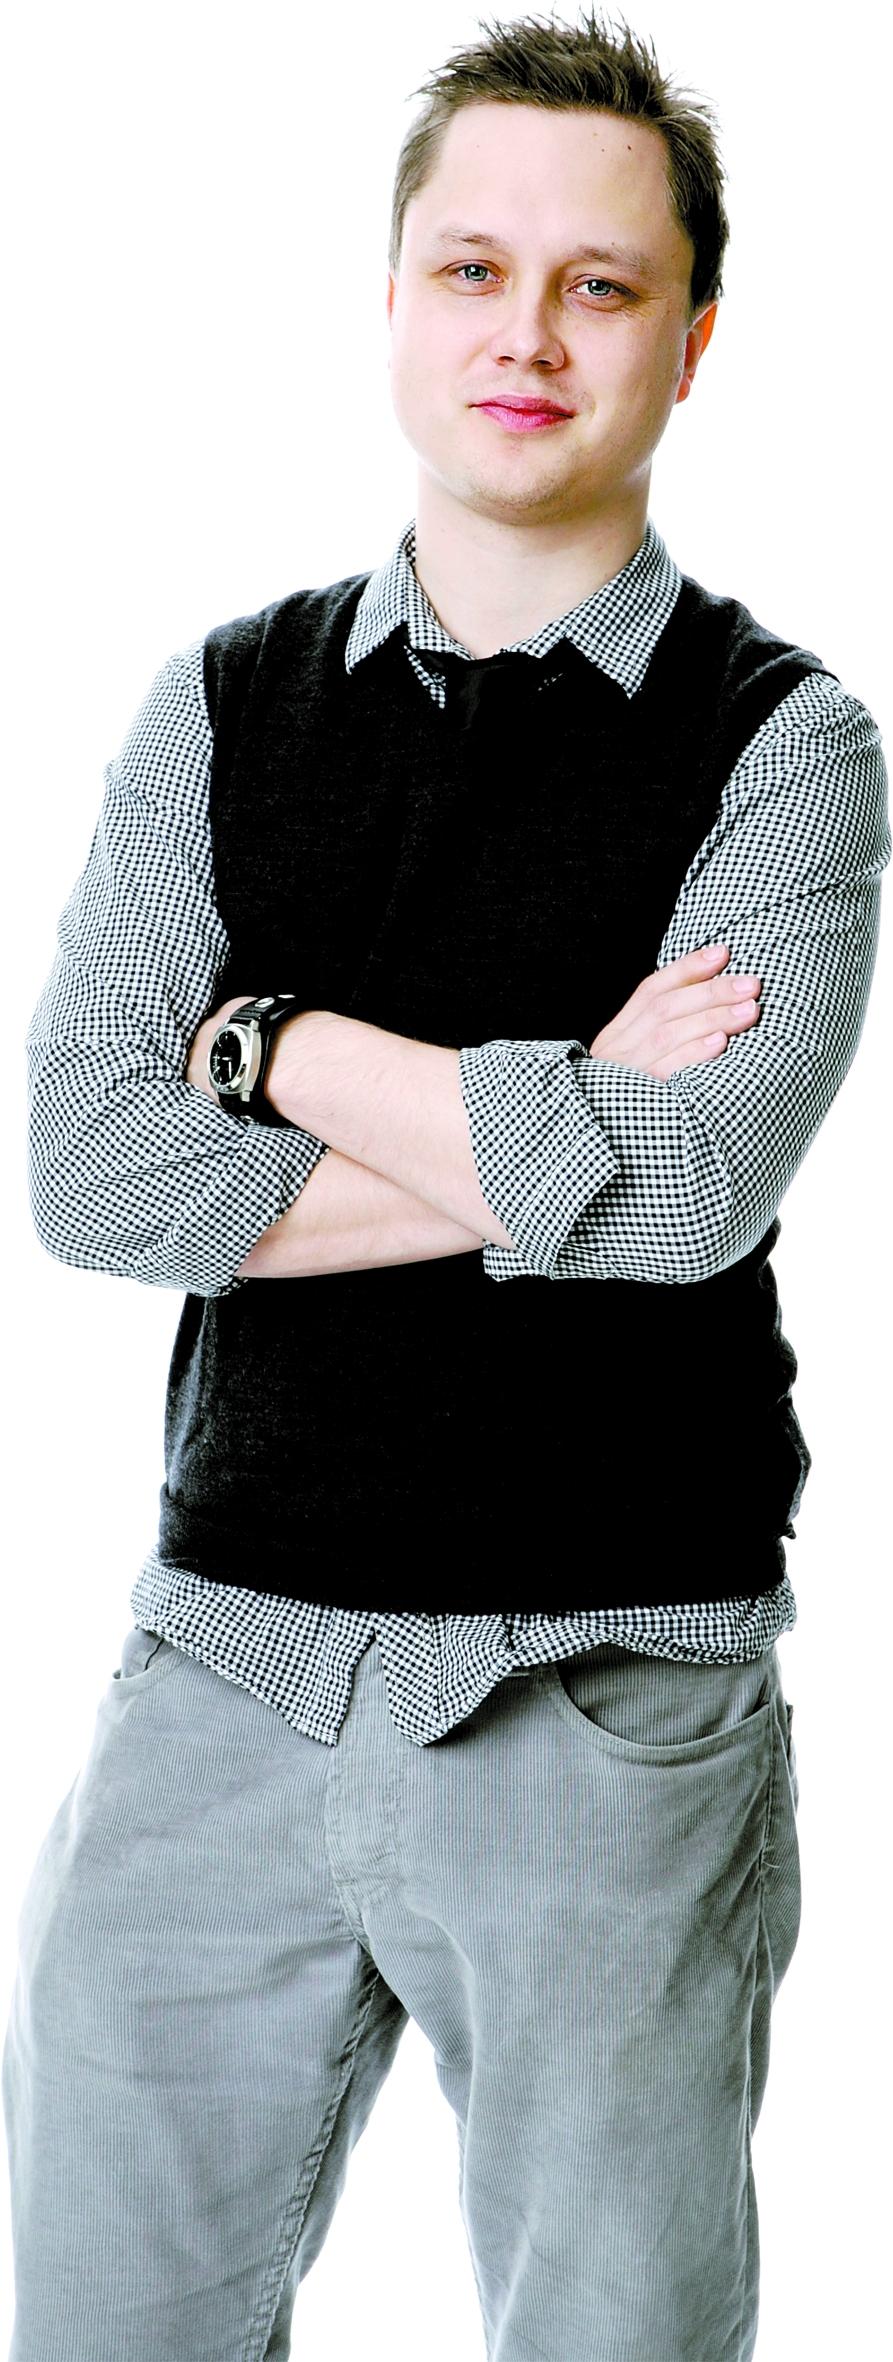 Aftonbladets schlagerkrönikör Markus Larsson.